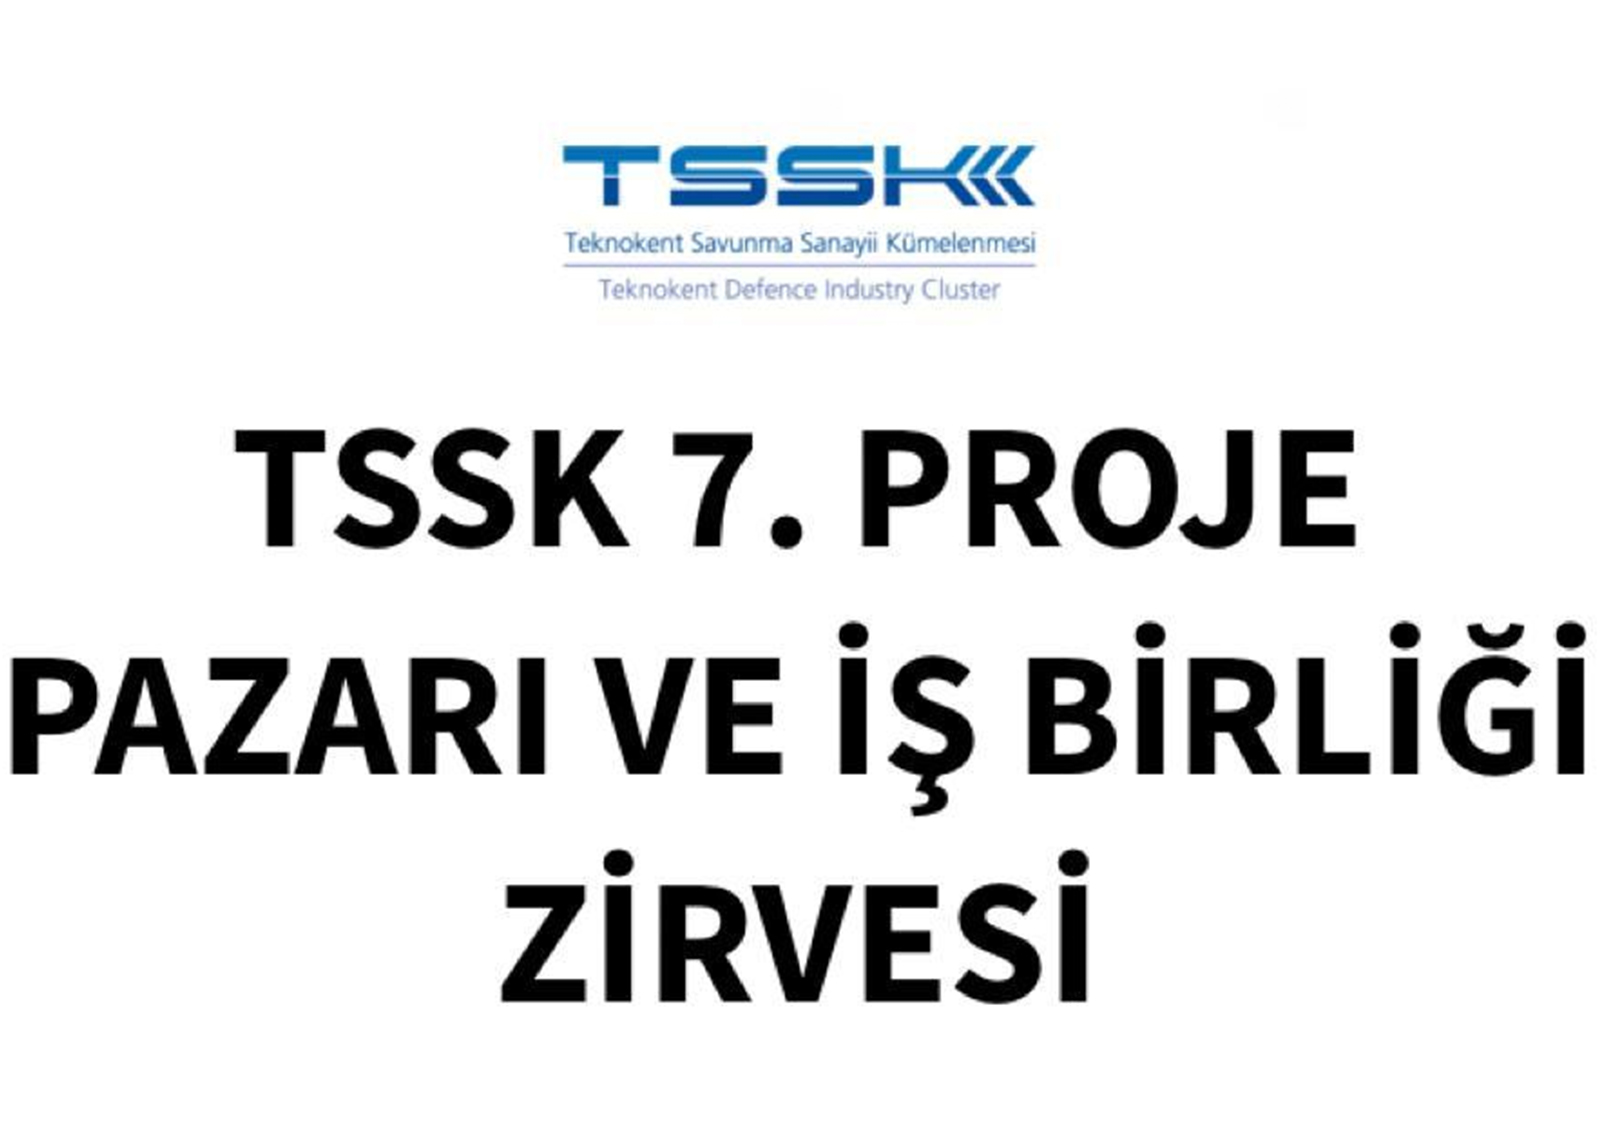 tssk-7-proje-pazari-ve-is-birligi-zirvesi-ne-katildik